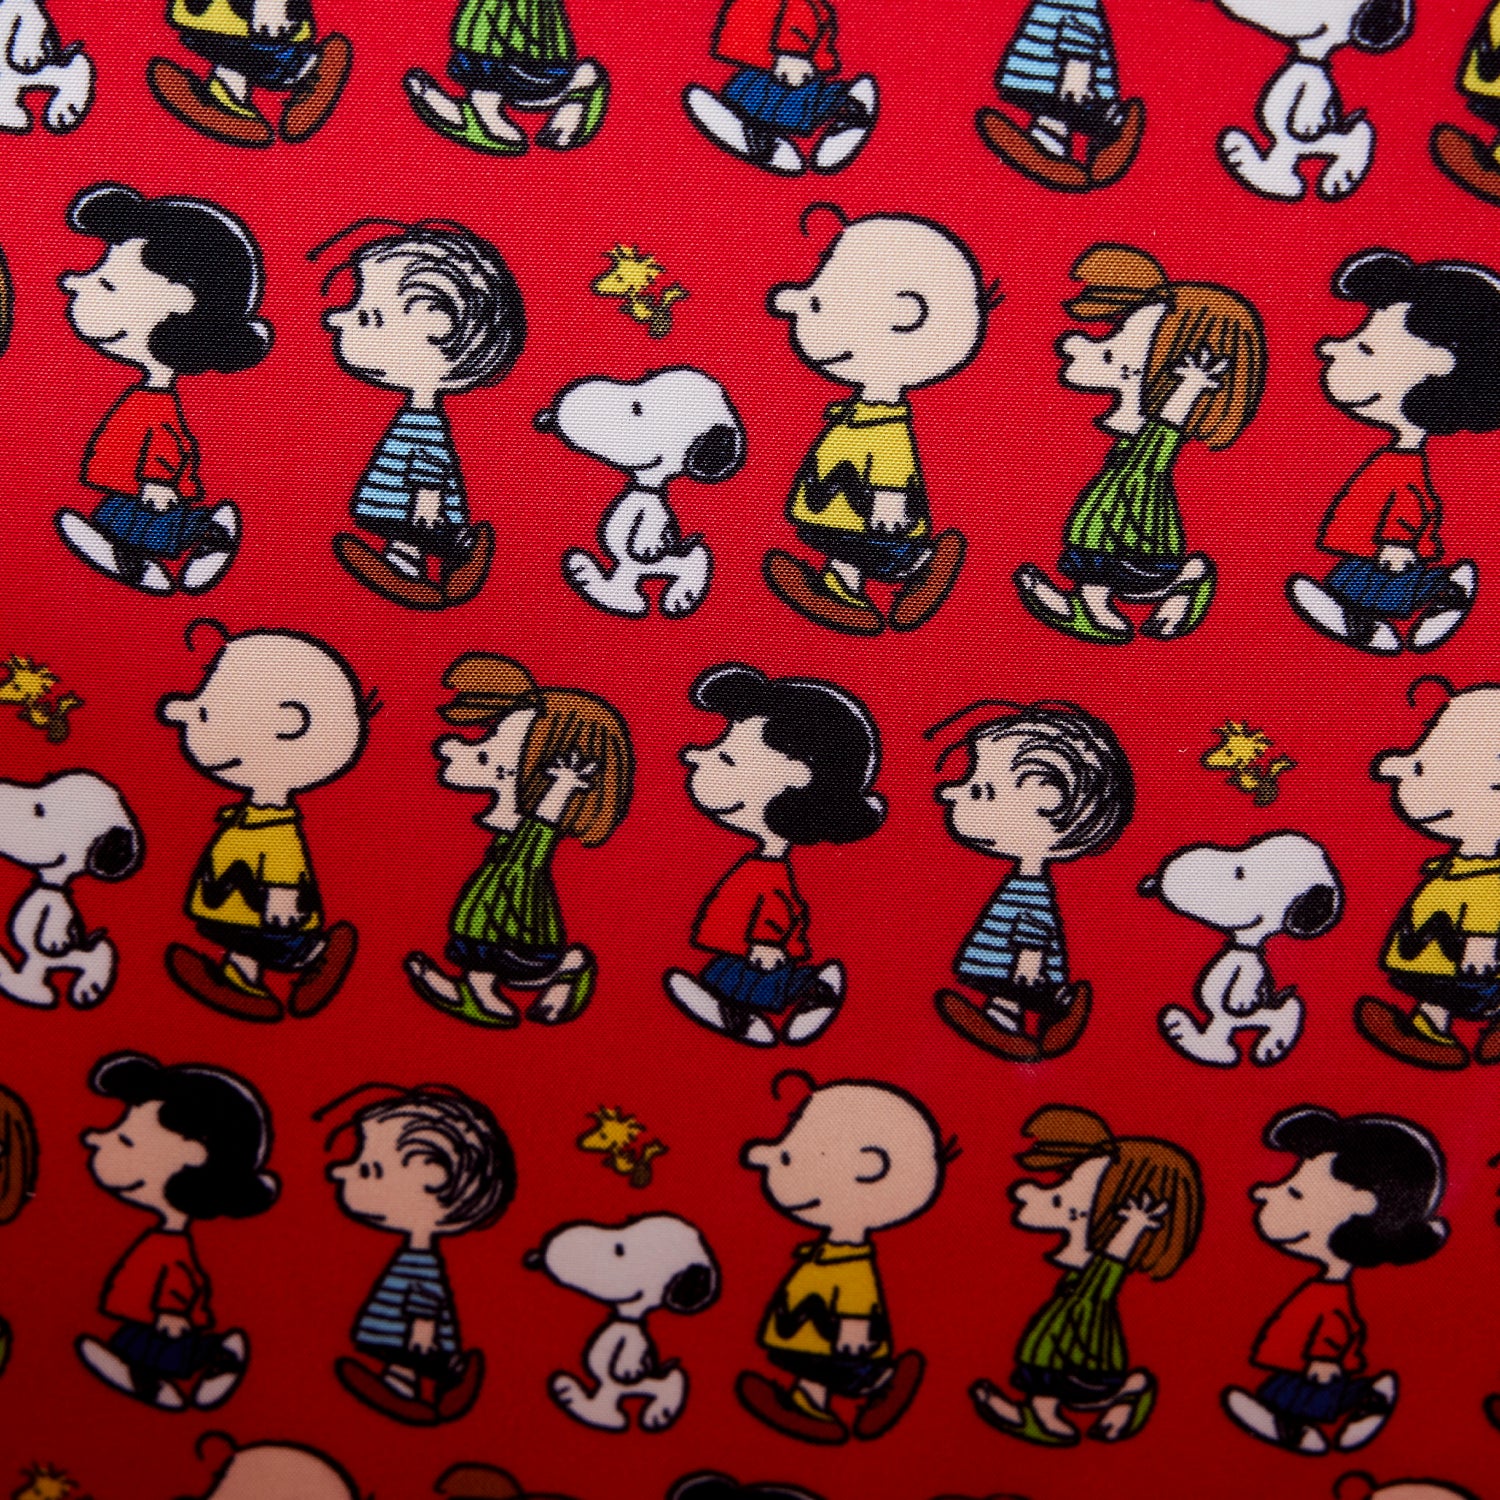 Peanuts | Charlie Brown Lunchbox Crossbody